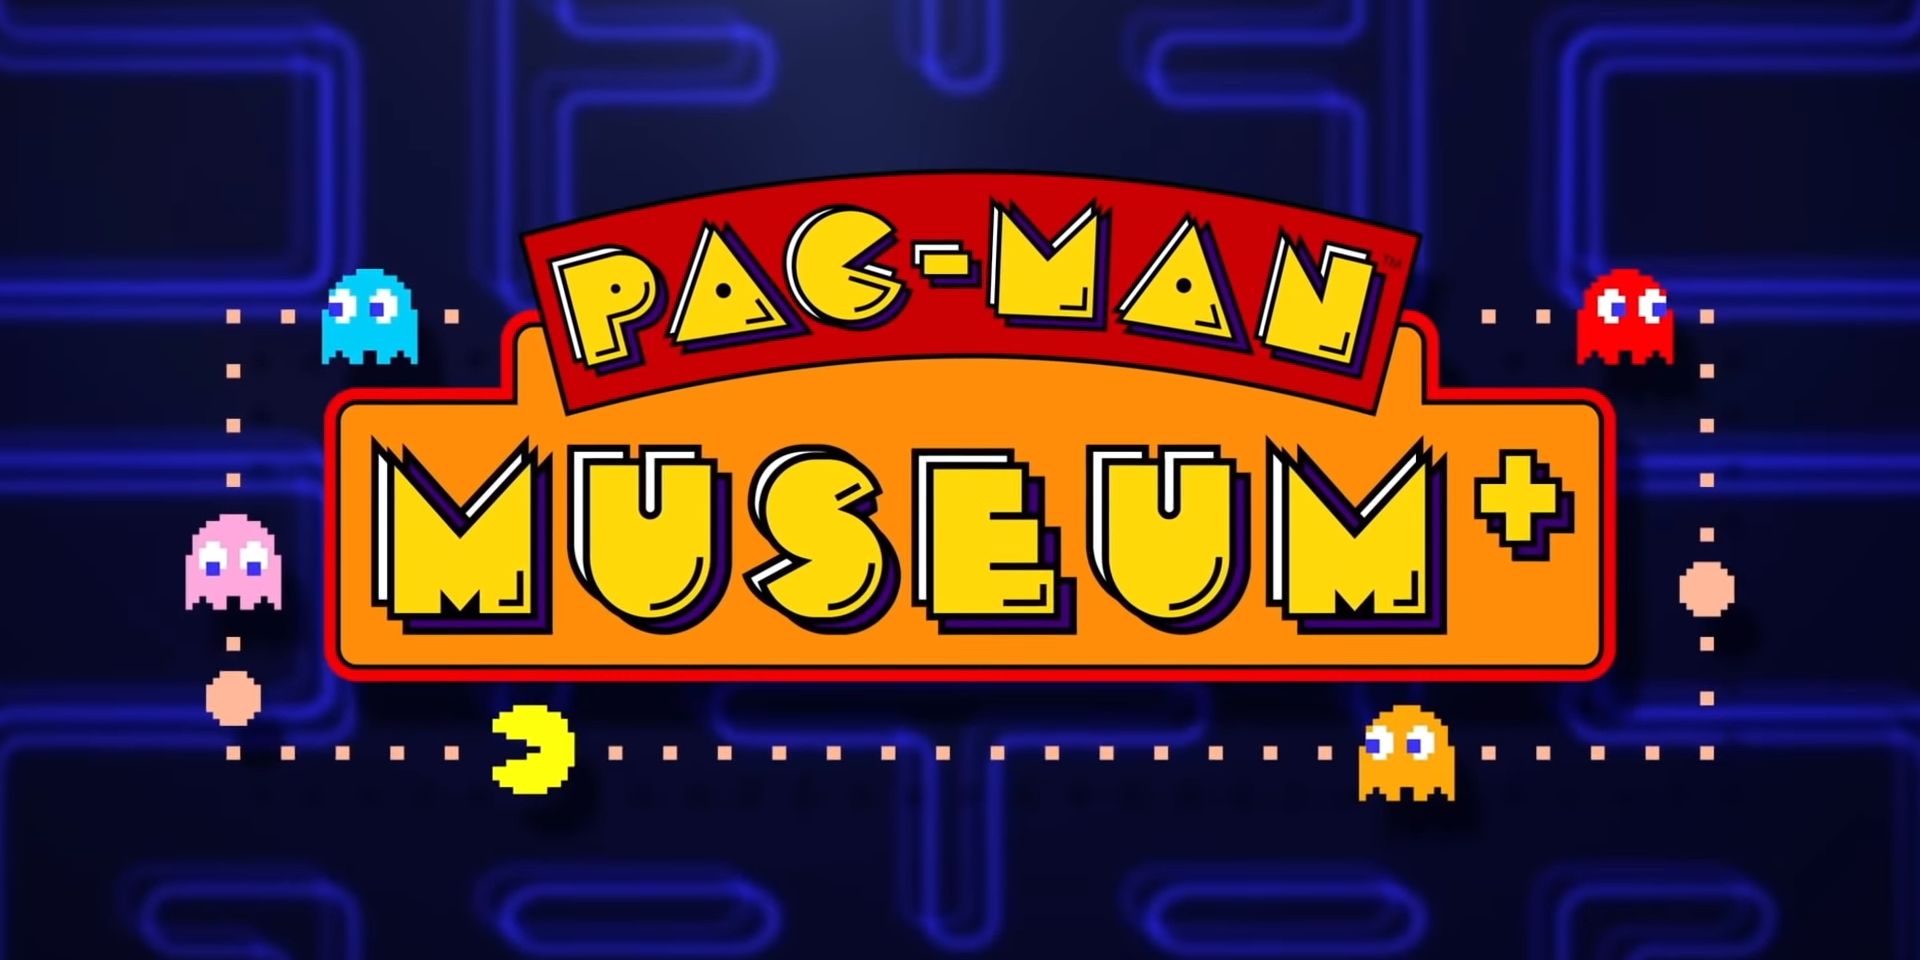 pac-man-museum-plus-release-date-trailer